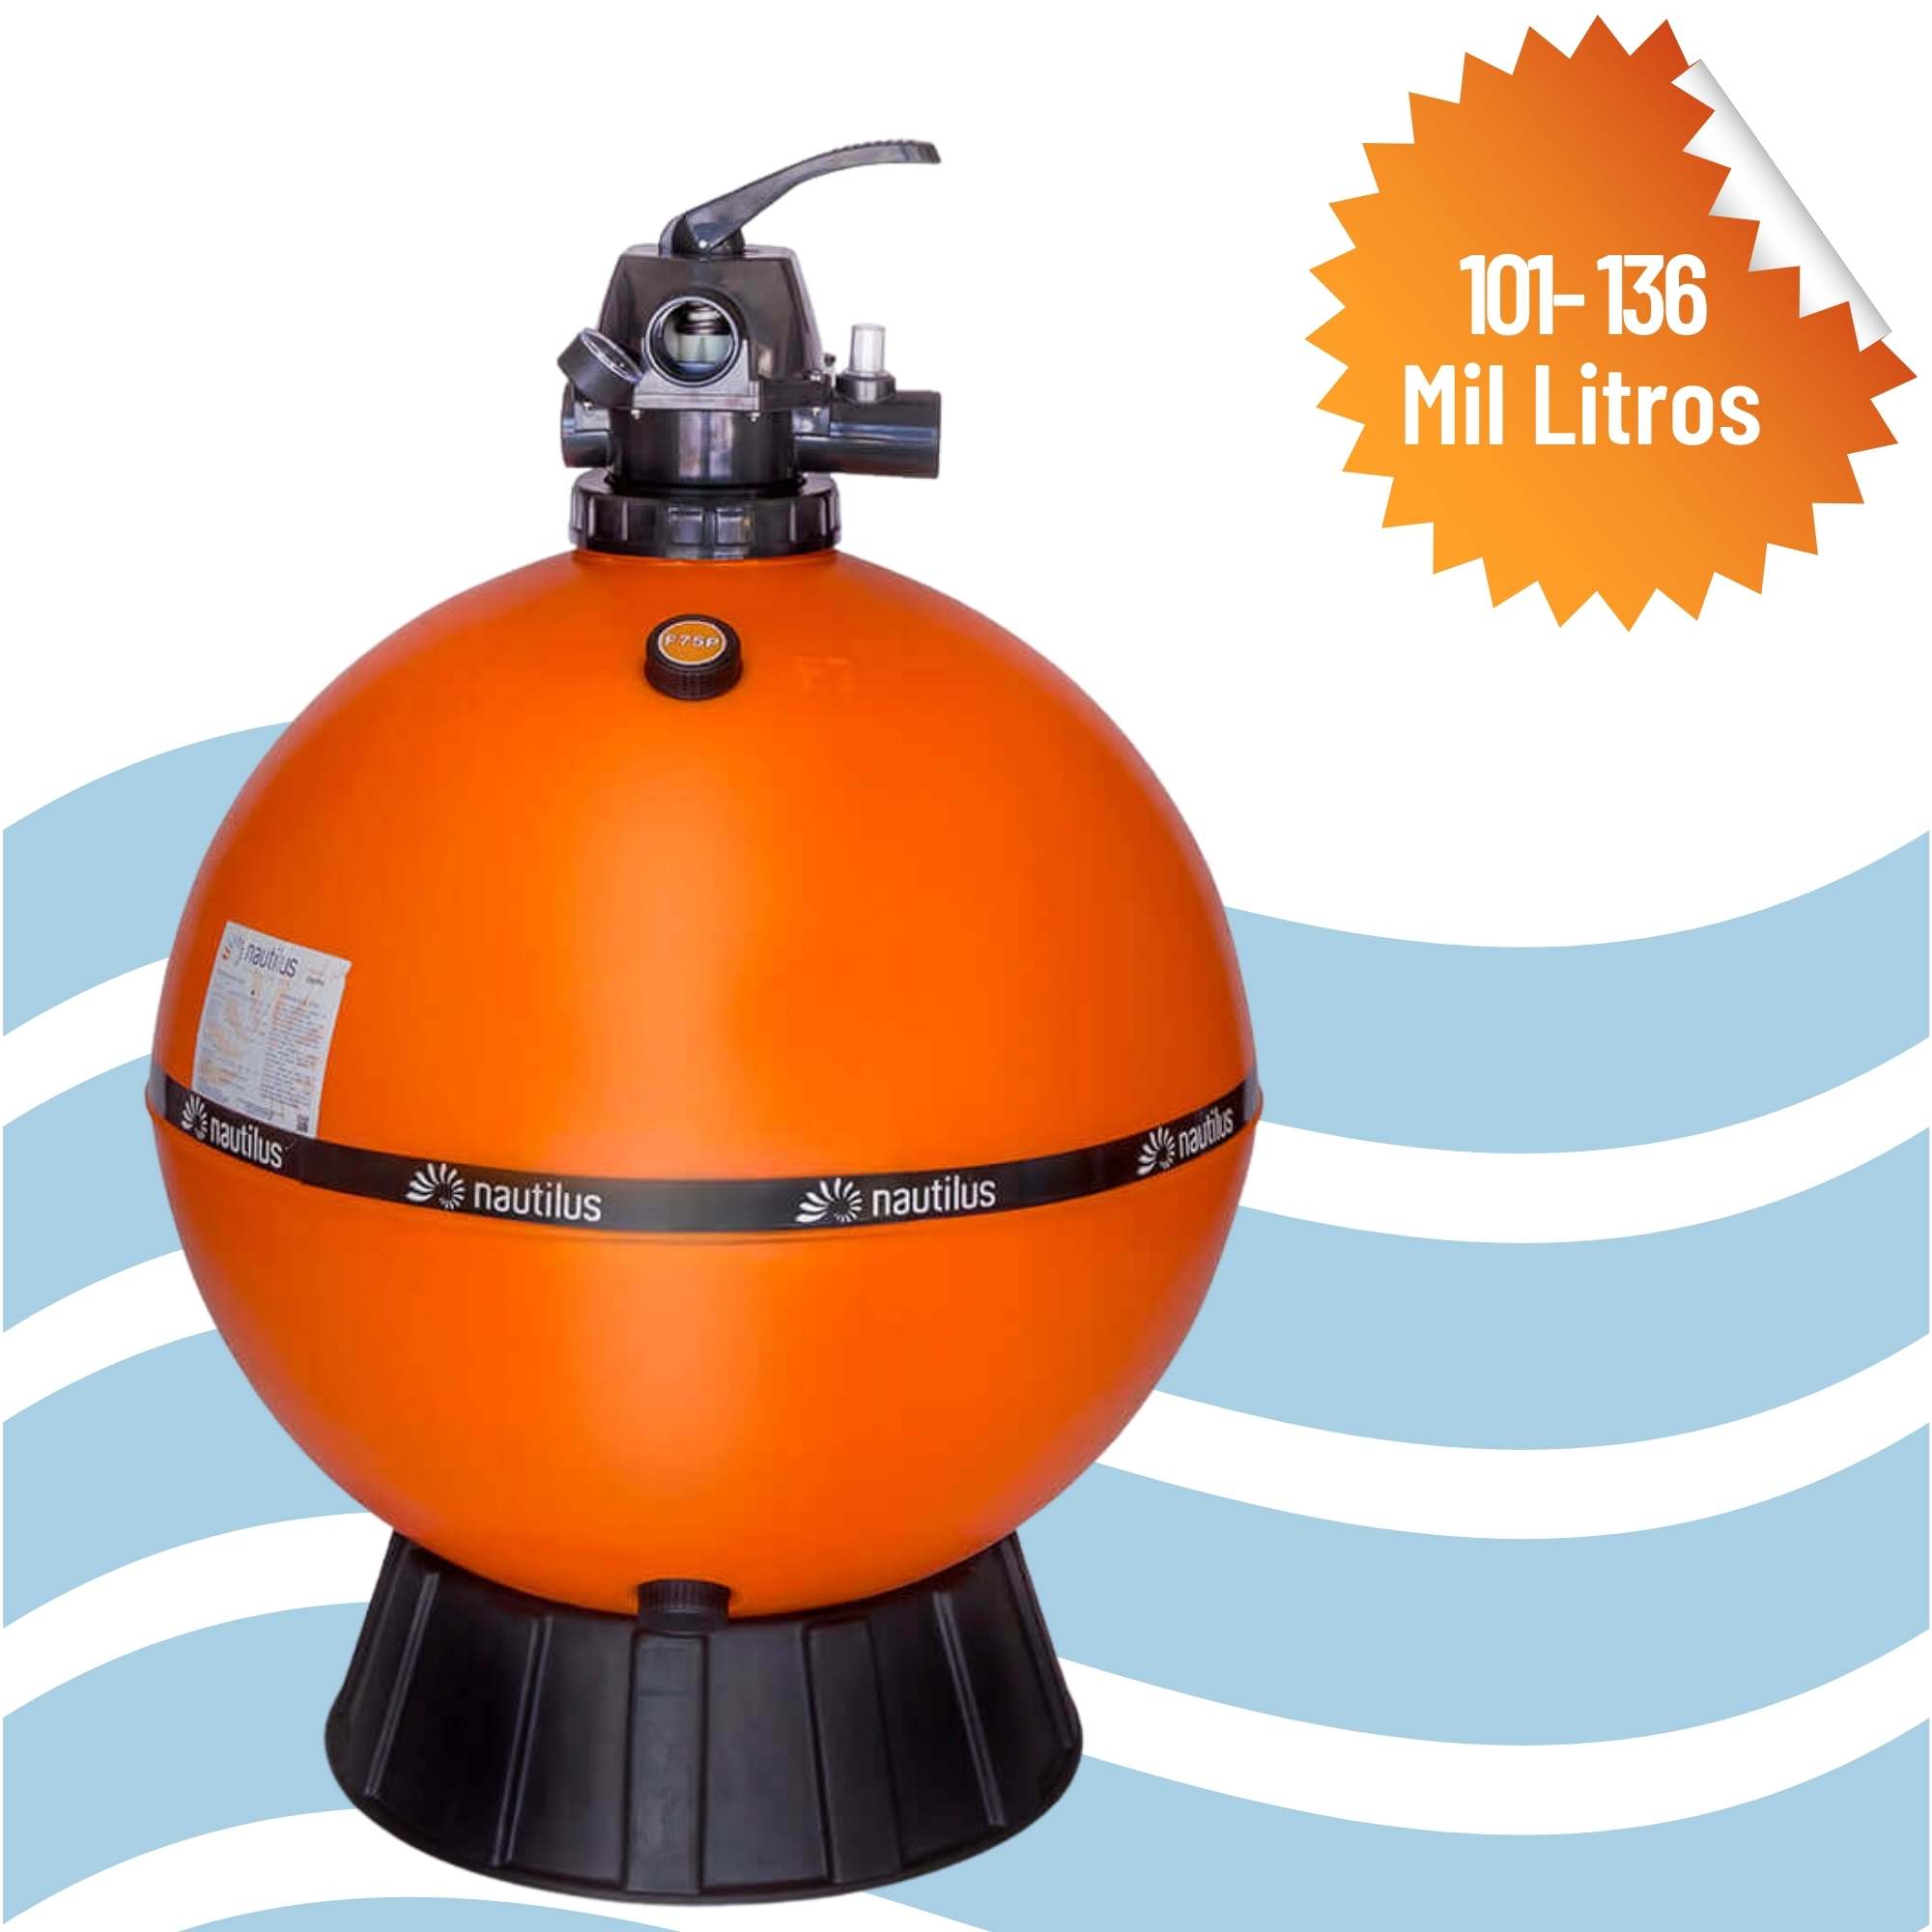 Filtro para Limpeza de Piscina até 101-136 Mil Litros F750P - Nautilus  - Sol e Água Piscinas e Acessórios